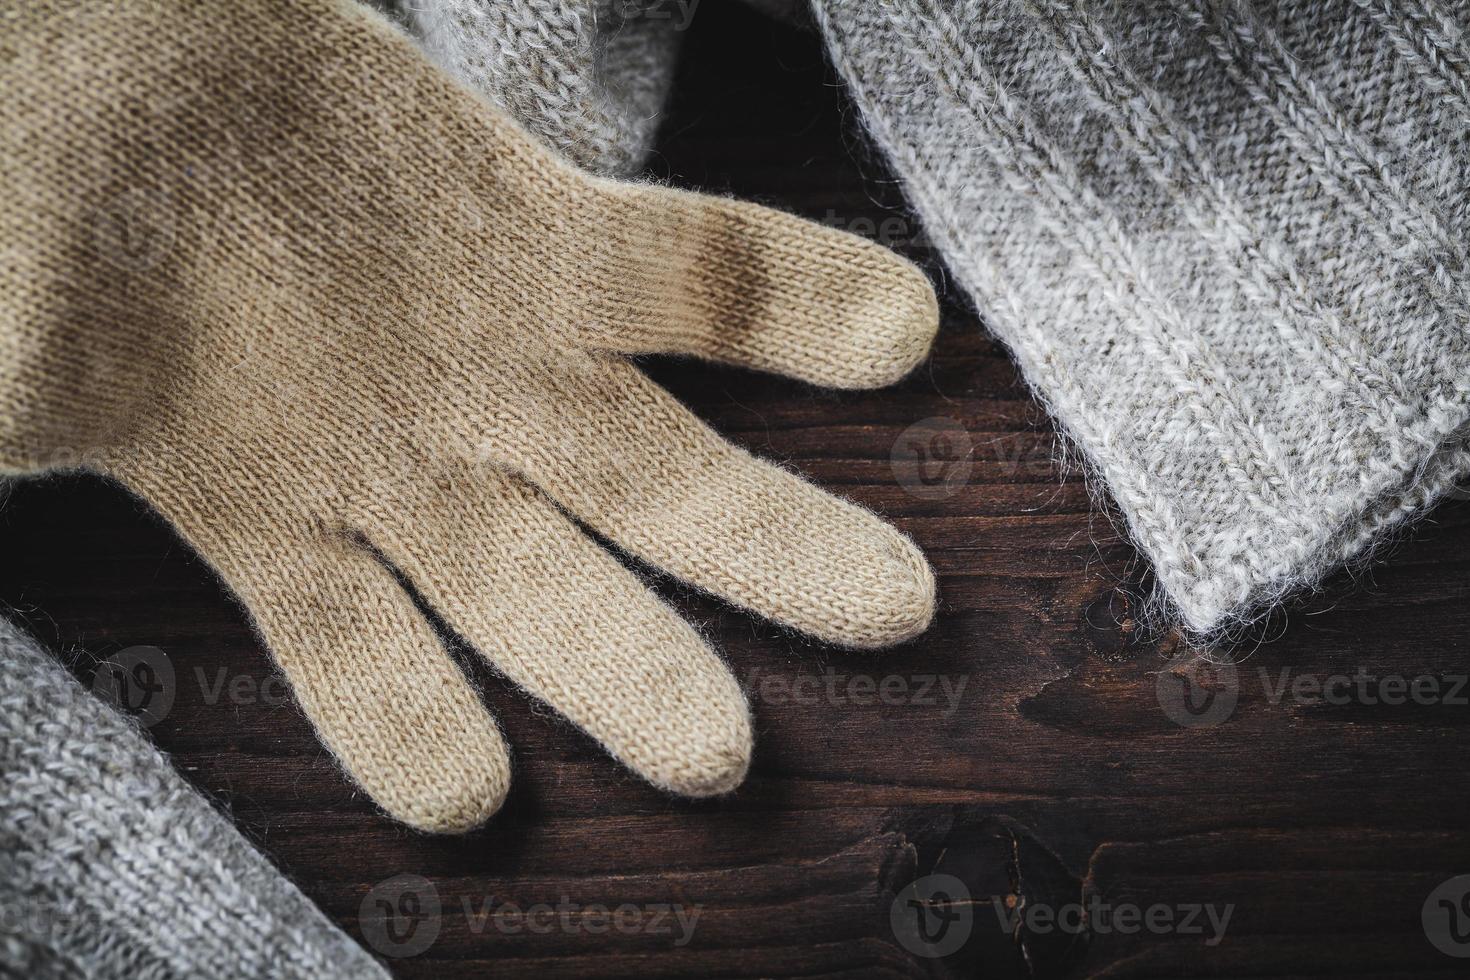 glove on wool sweater photo